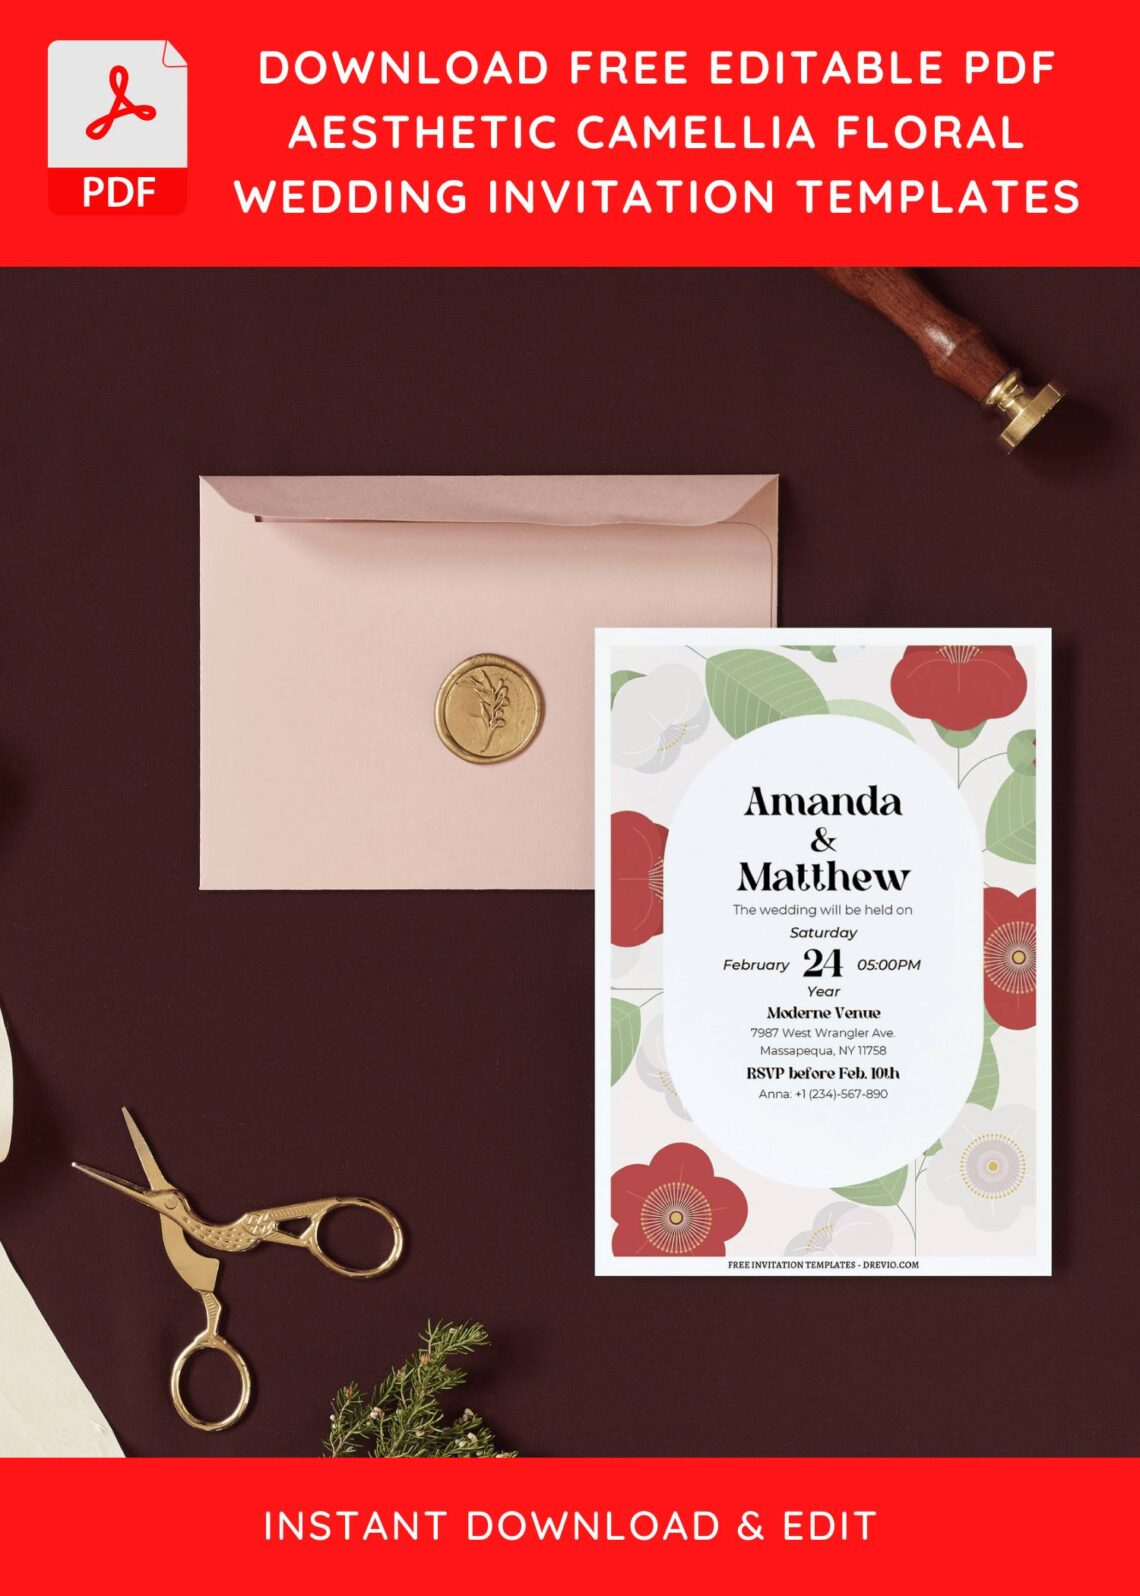 (Free Editable PDF) Aesthetic Camellia Floral Wedding Invitation Templates I